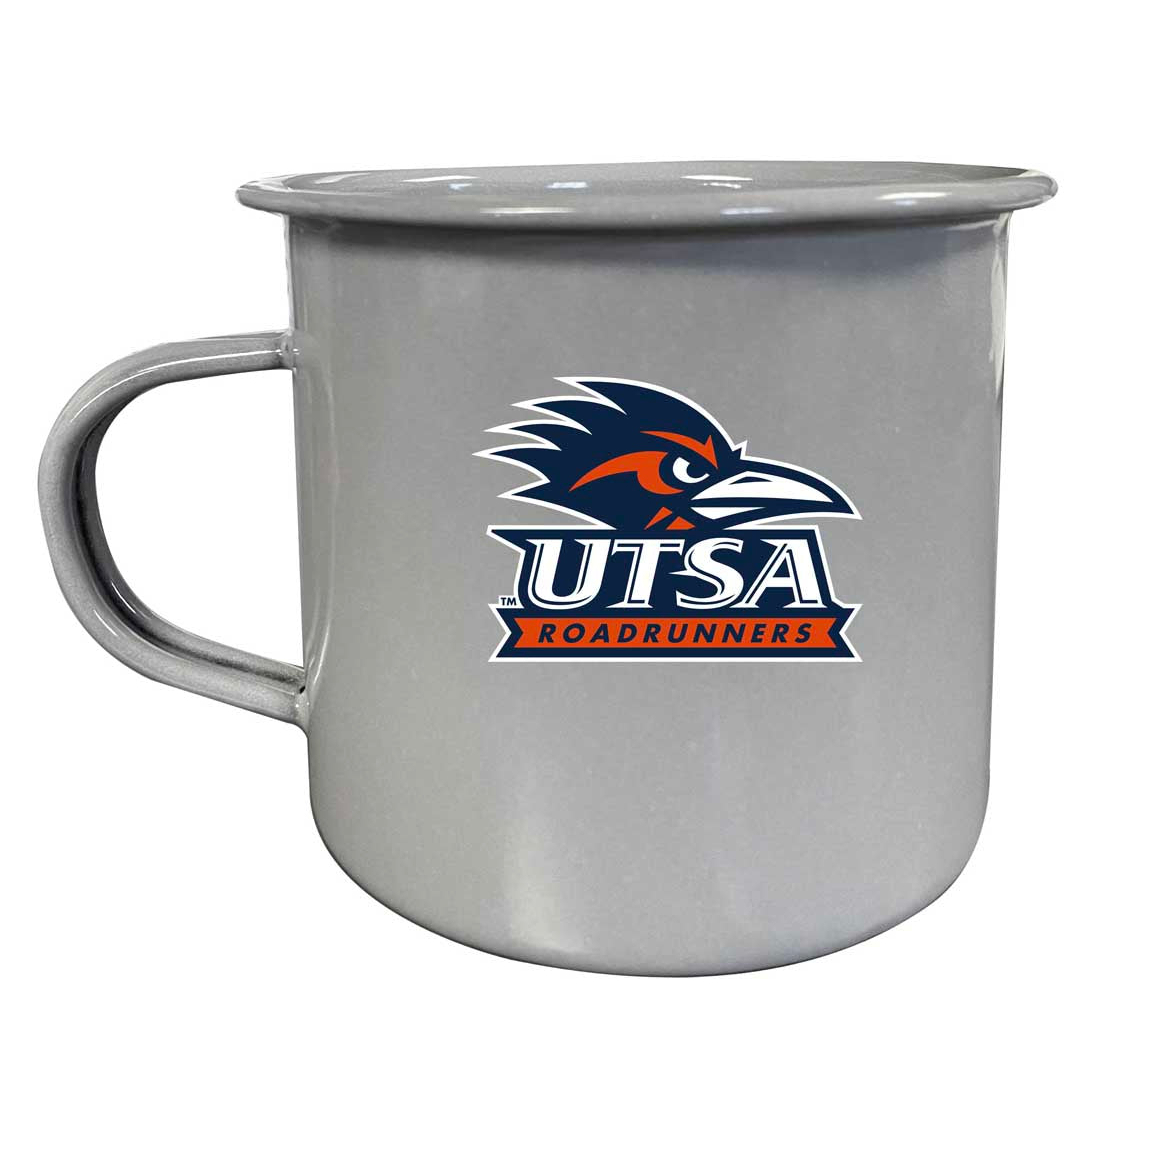 UTSA Road Runners Tin Camper Coffee Mug - Choose Your Color - Gray